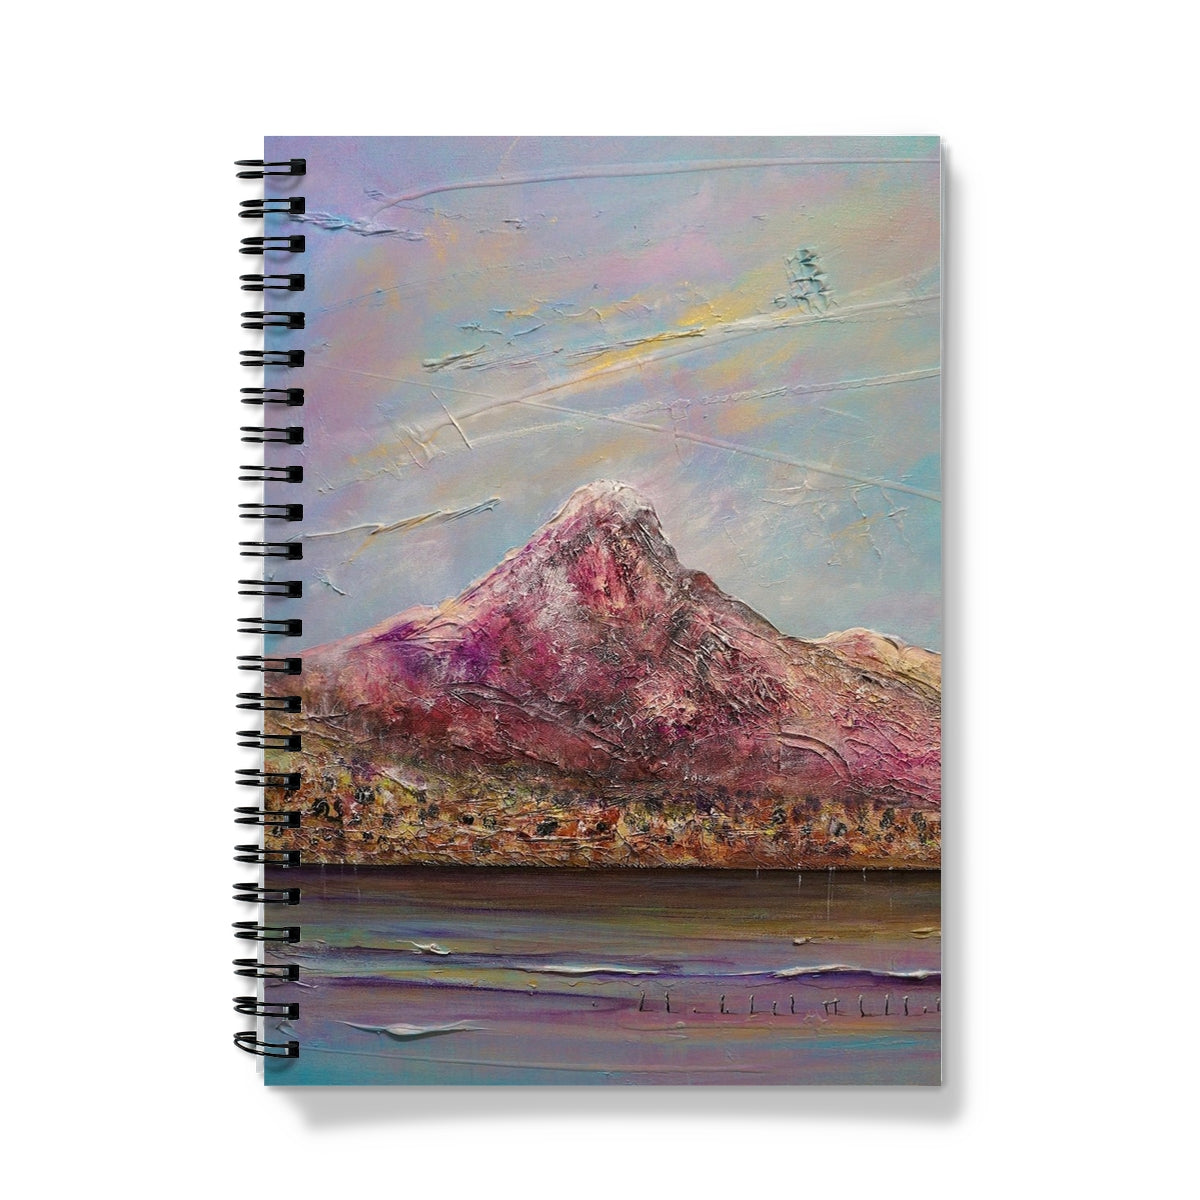 Ben Lomond Art Gifts Notebook-Journals & Notebooks-Scottish Lochs & Mountains Art Gallery-A5-Graph-Paintings, Prints, Homeware, Art Gifts From Scotland By Scottish Artist Kevin Hunter